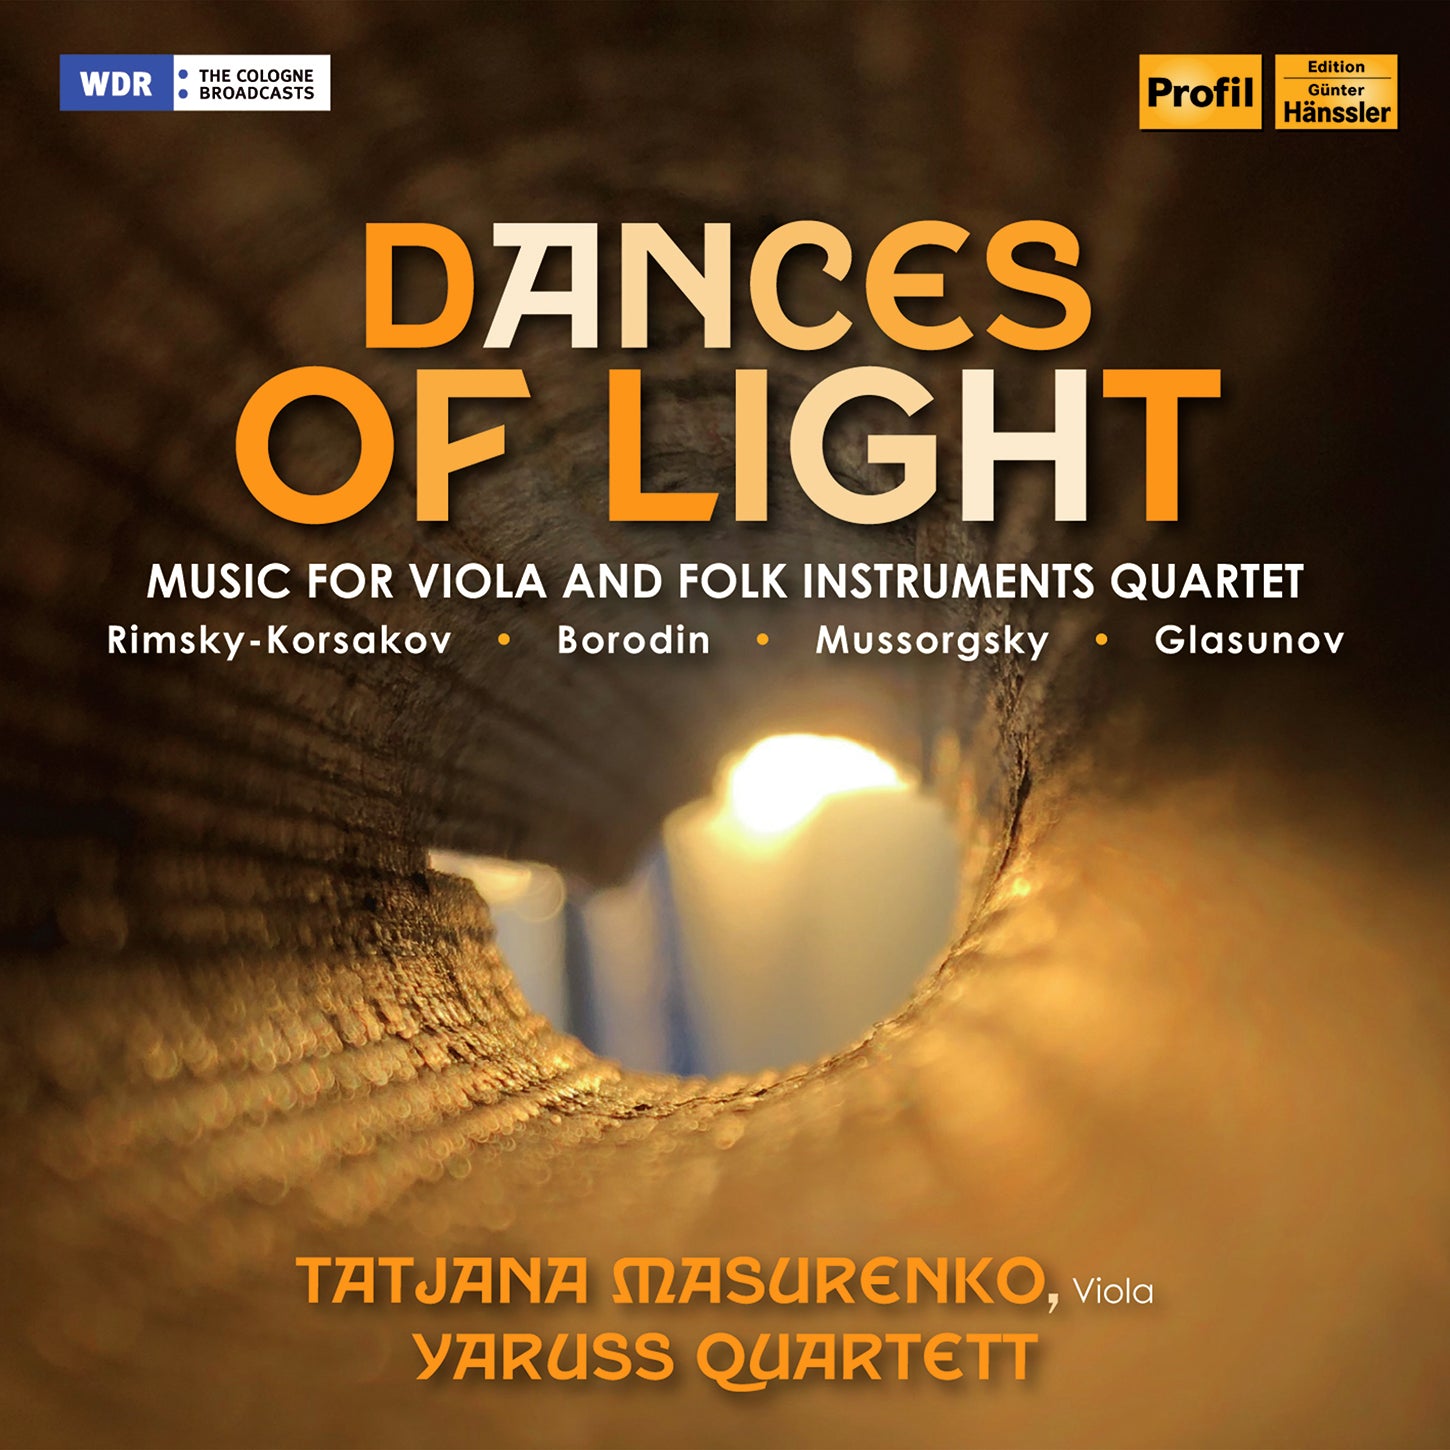 Borodin, Glazunov, Mussorgsky & Rimsky-Korsakov: Dances of Light / Masurenko, Yaruss Quartet